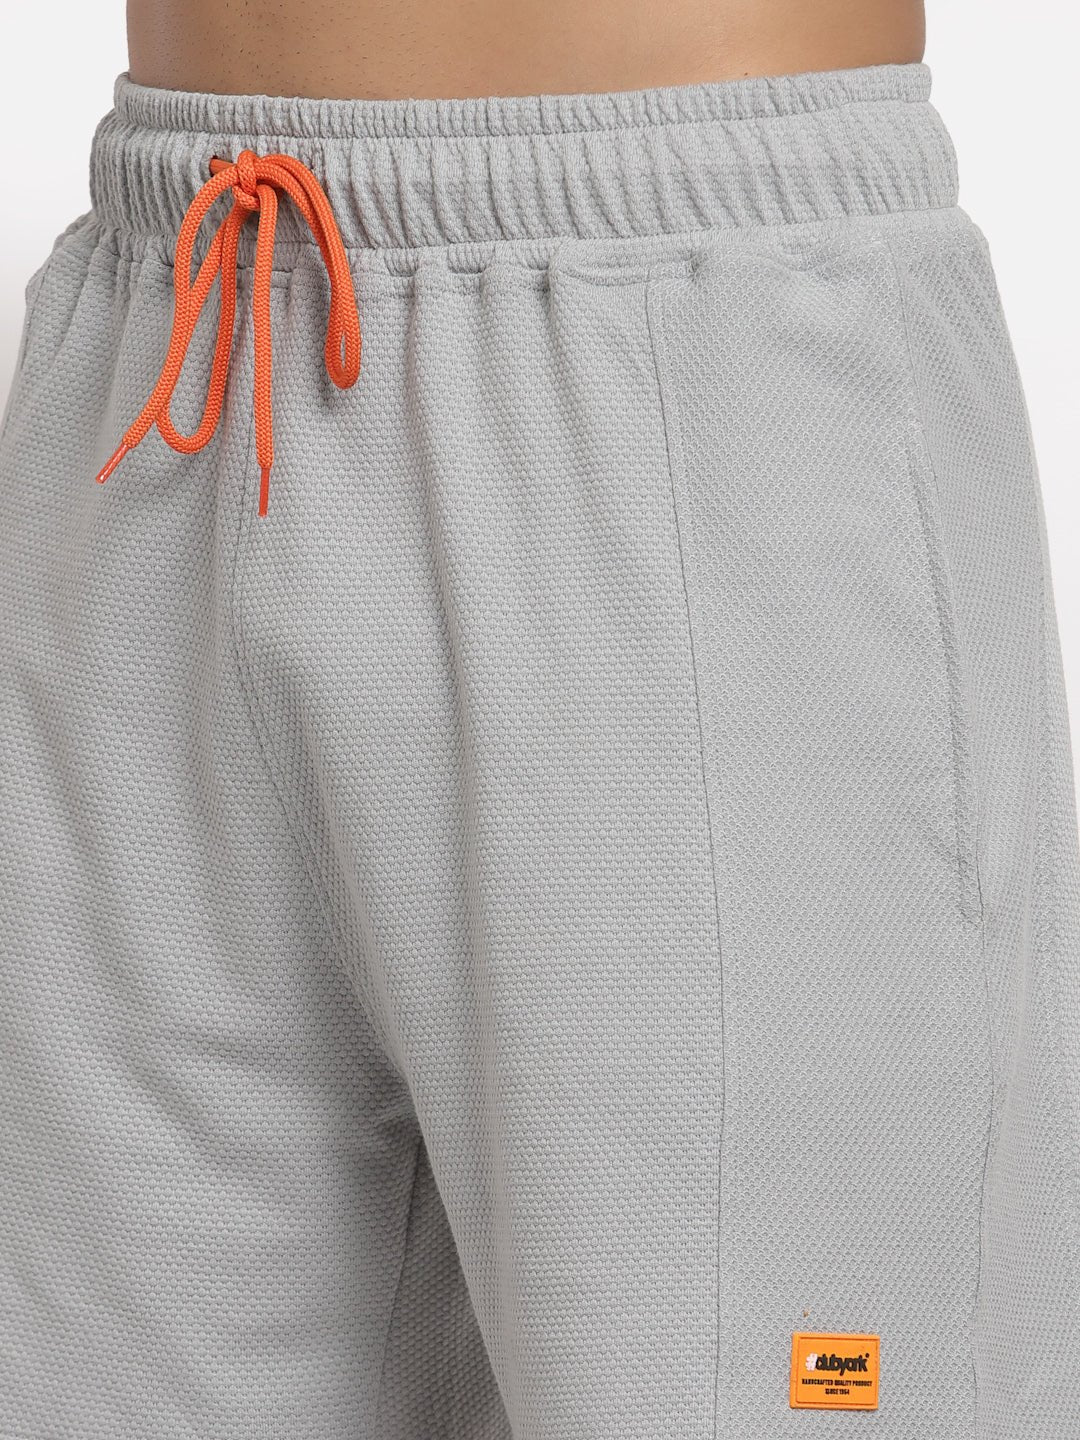 Light Grey Shorts - clubyork